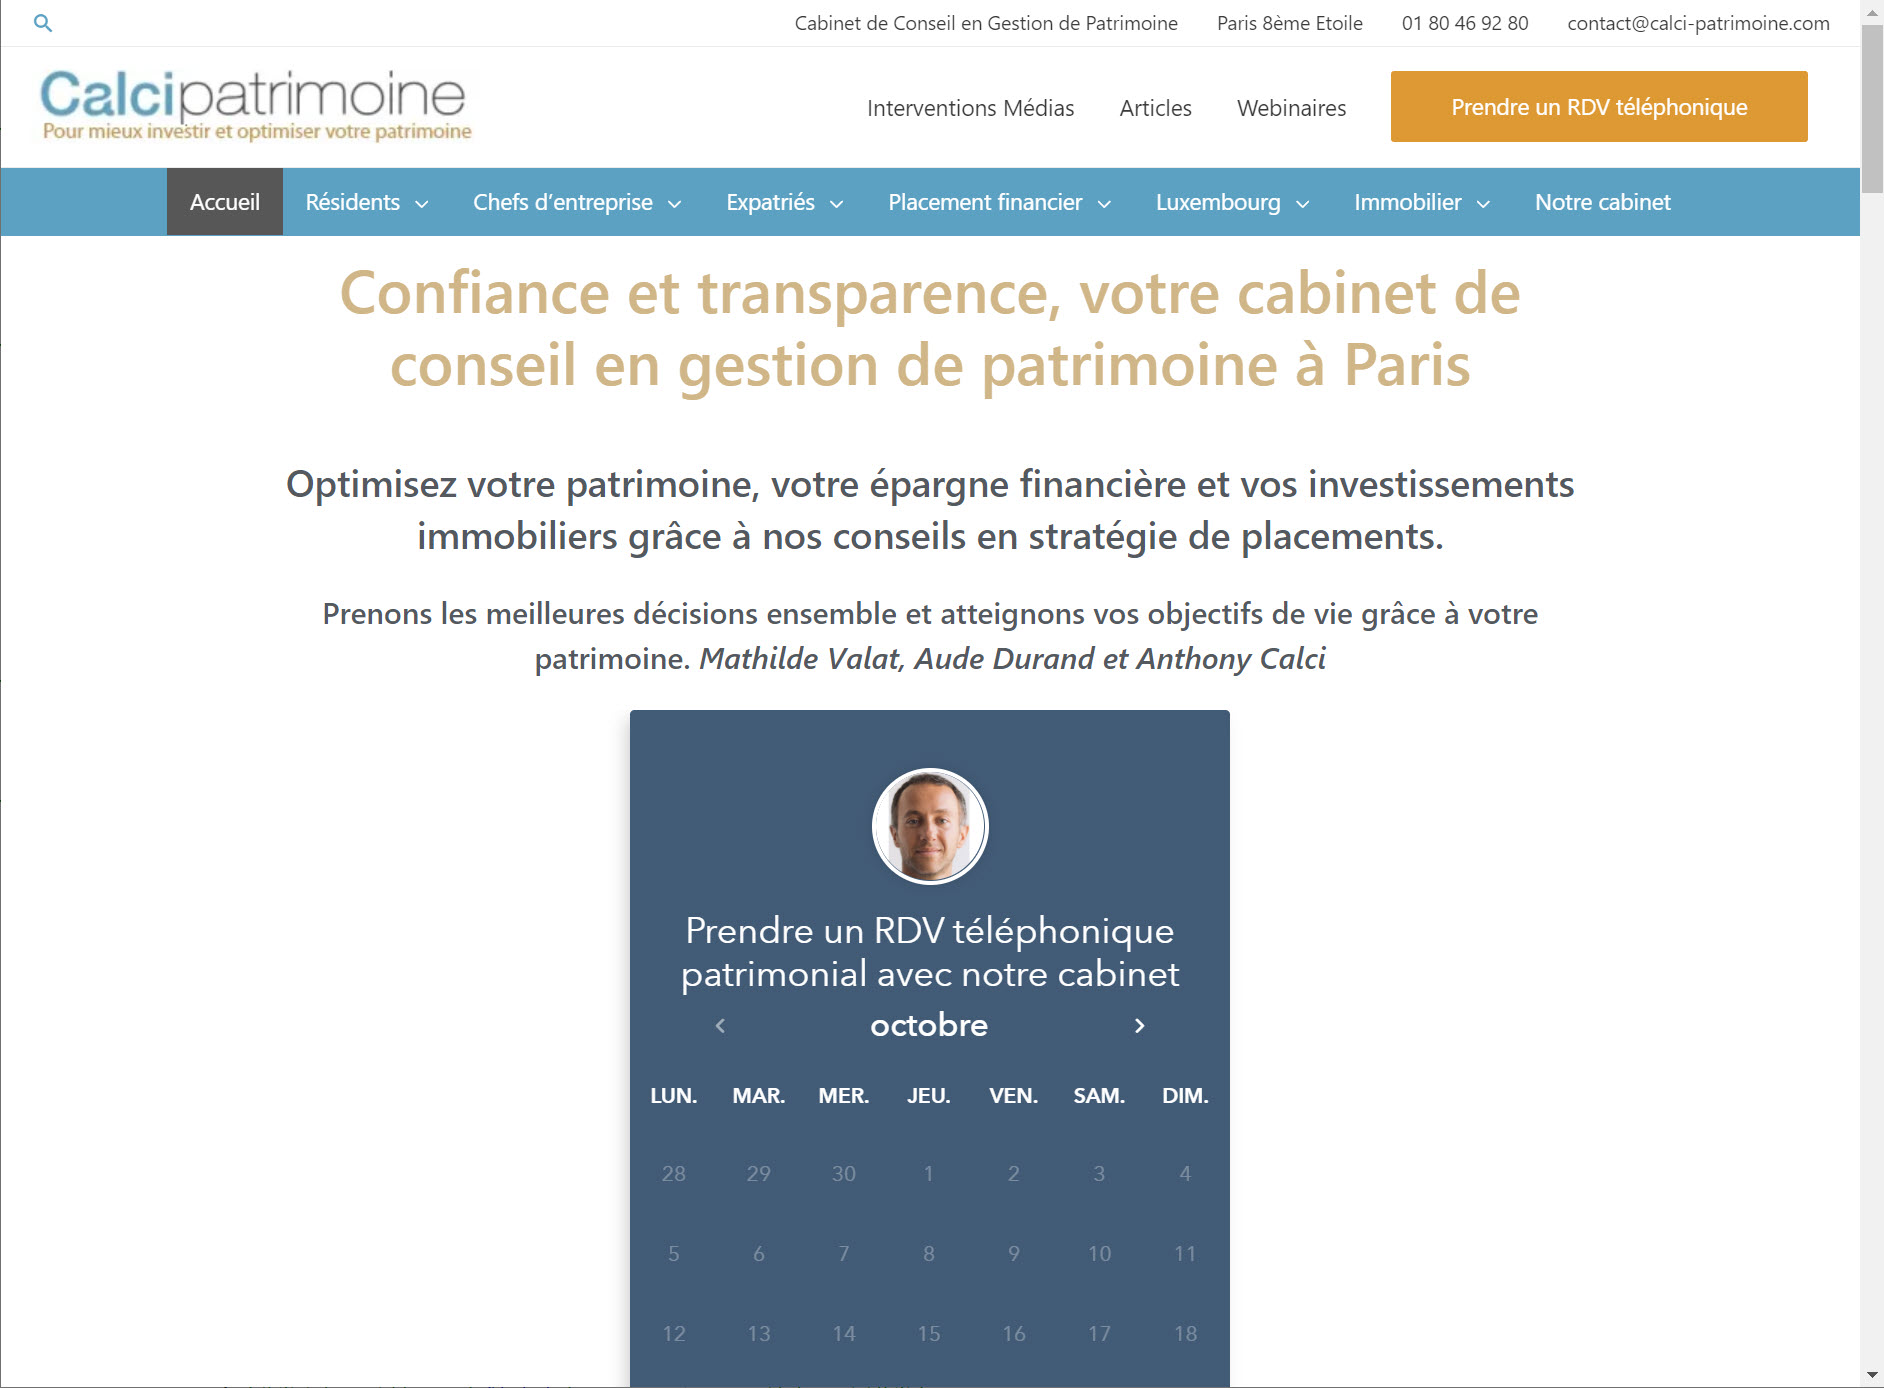 Assurance-vie luxembourgeoise en gestion patrimoniale